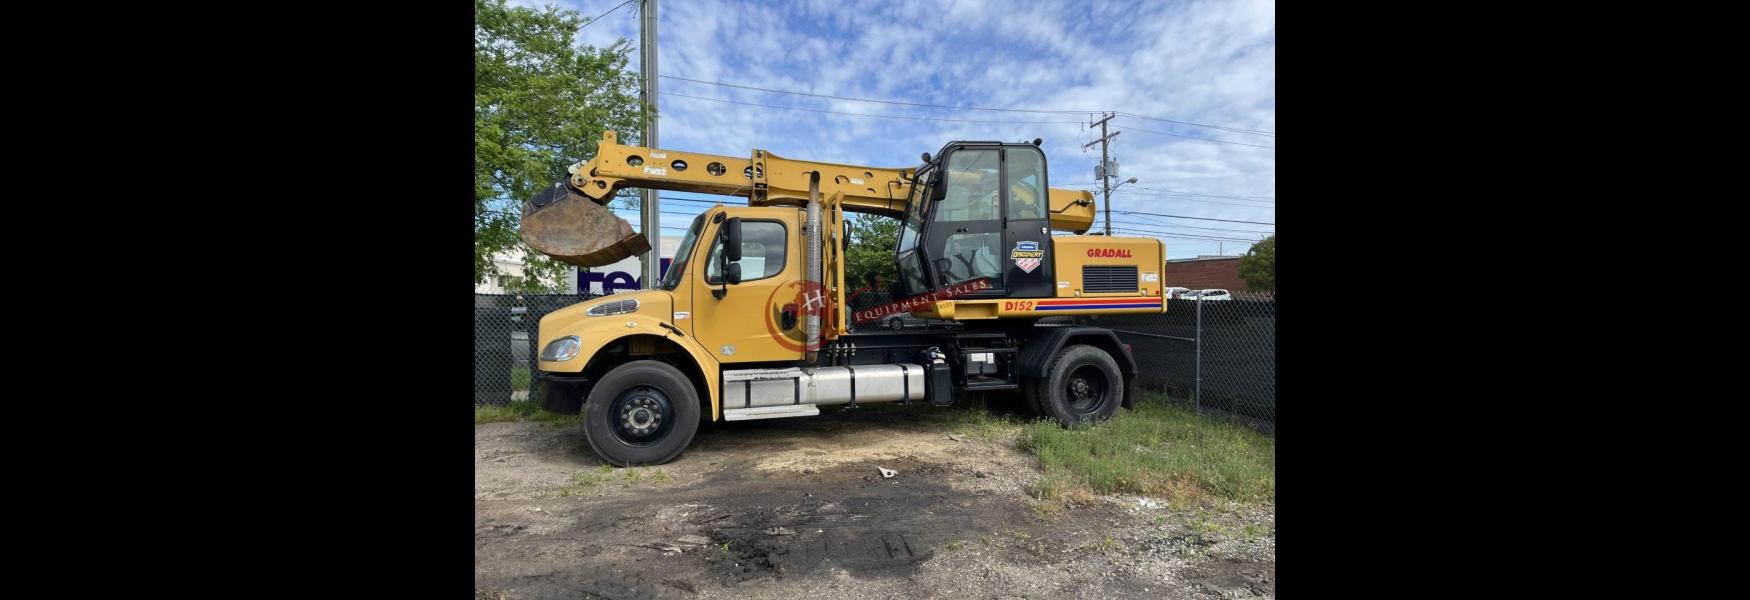 Henry Equipment Sales - 2016 Gradall D152 Wheel Excavator